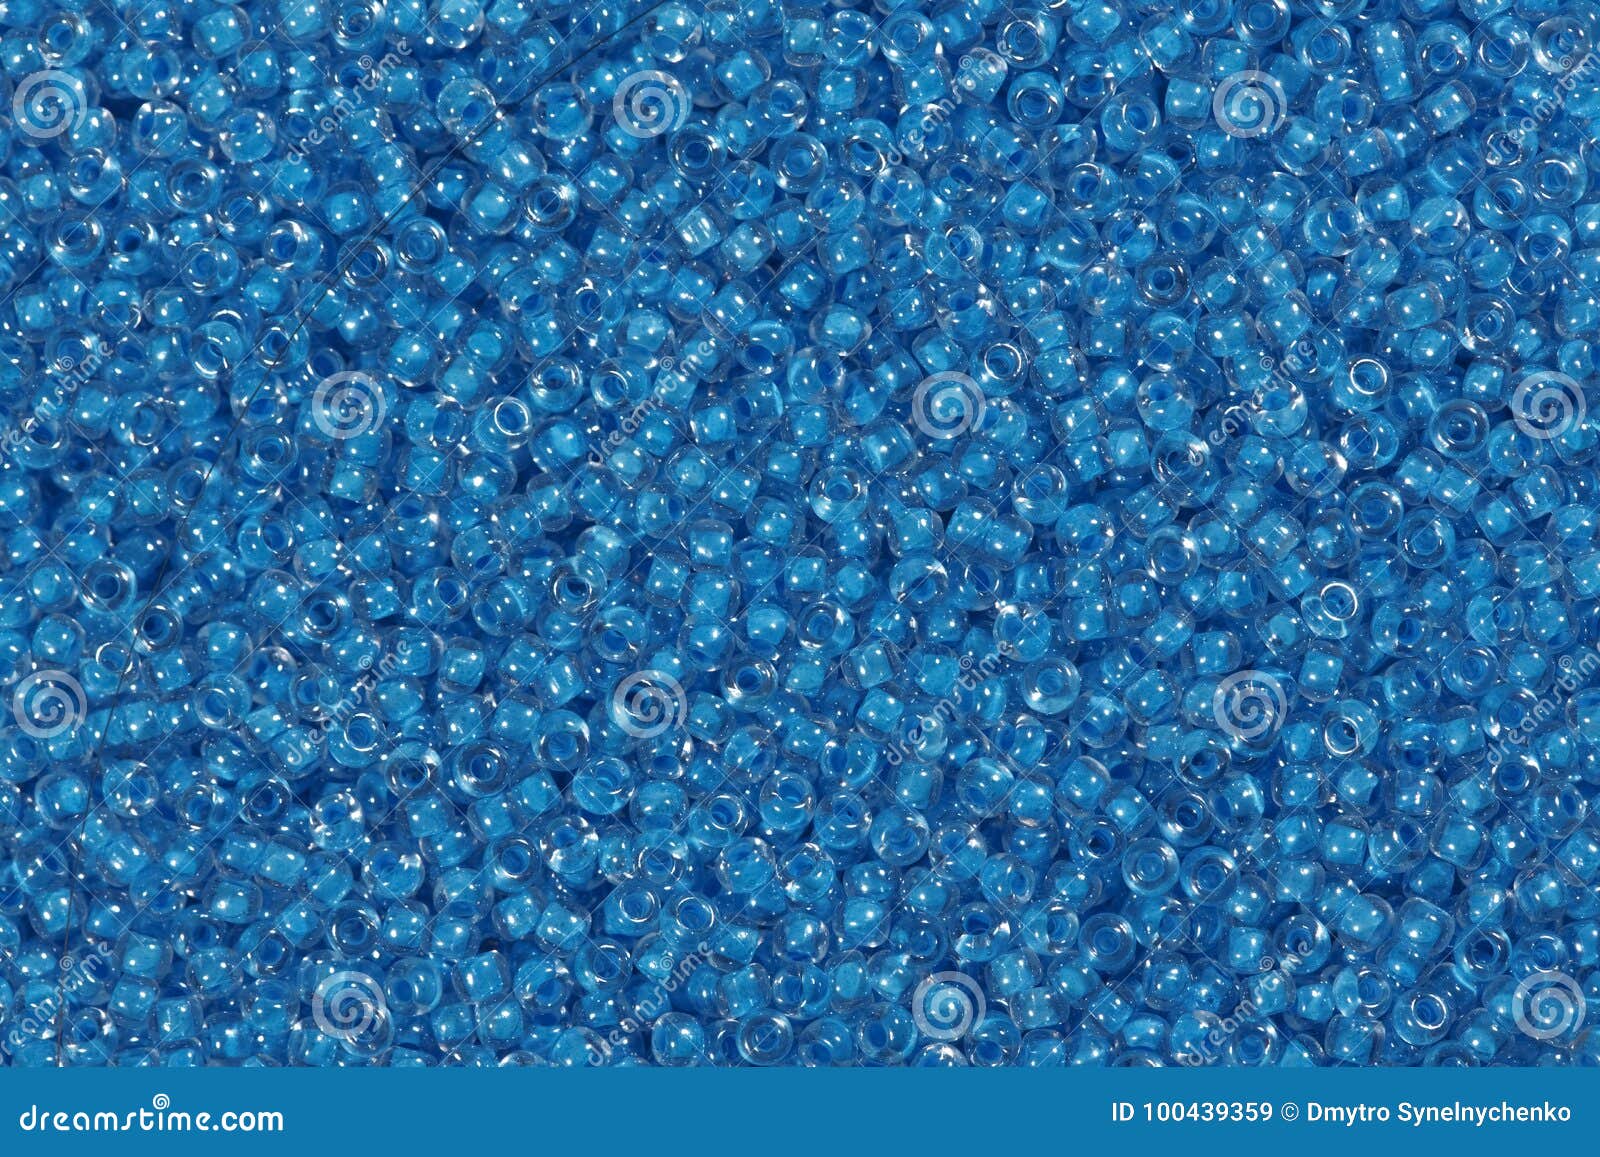 Light Blue Beads of High Quality. Stock Image - Image of black, fashion ...